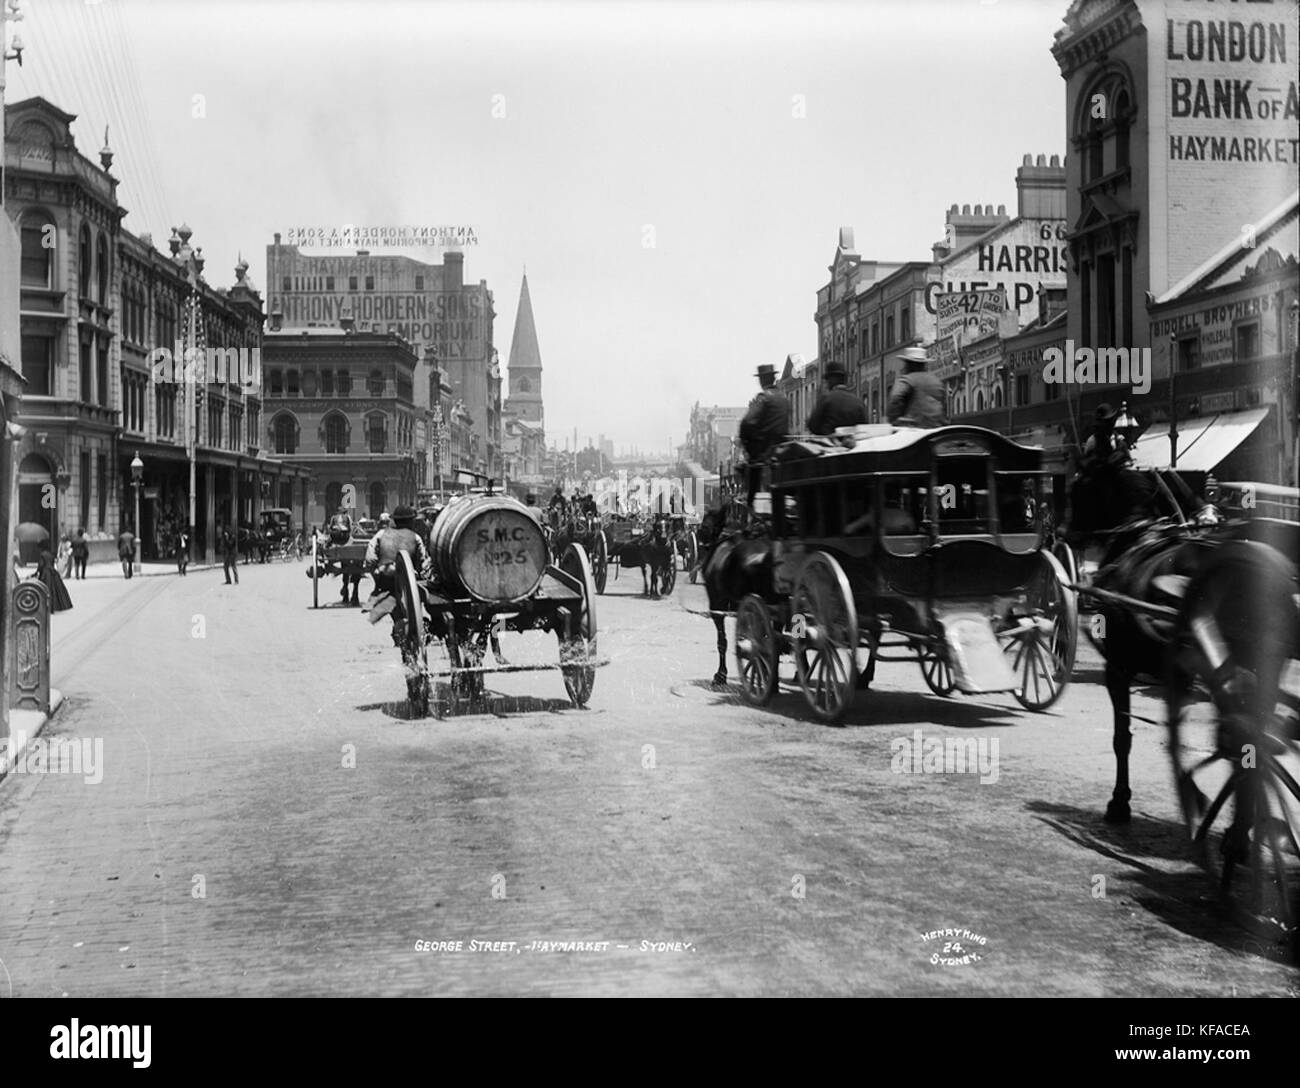 George Street, Haymarket, Sydney, c 1900 Stock Photo